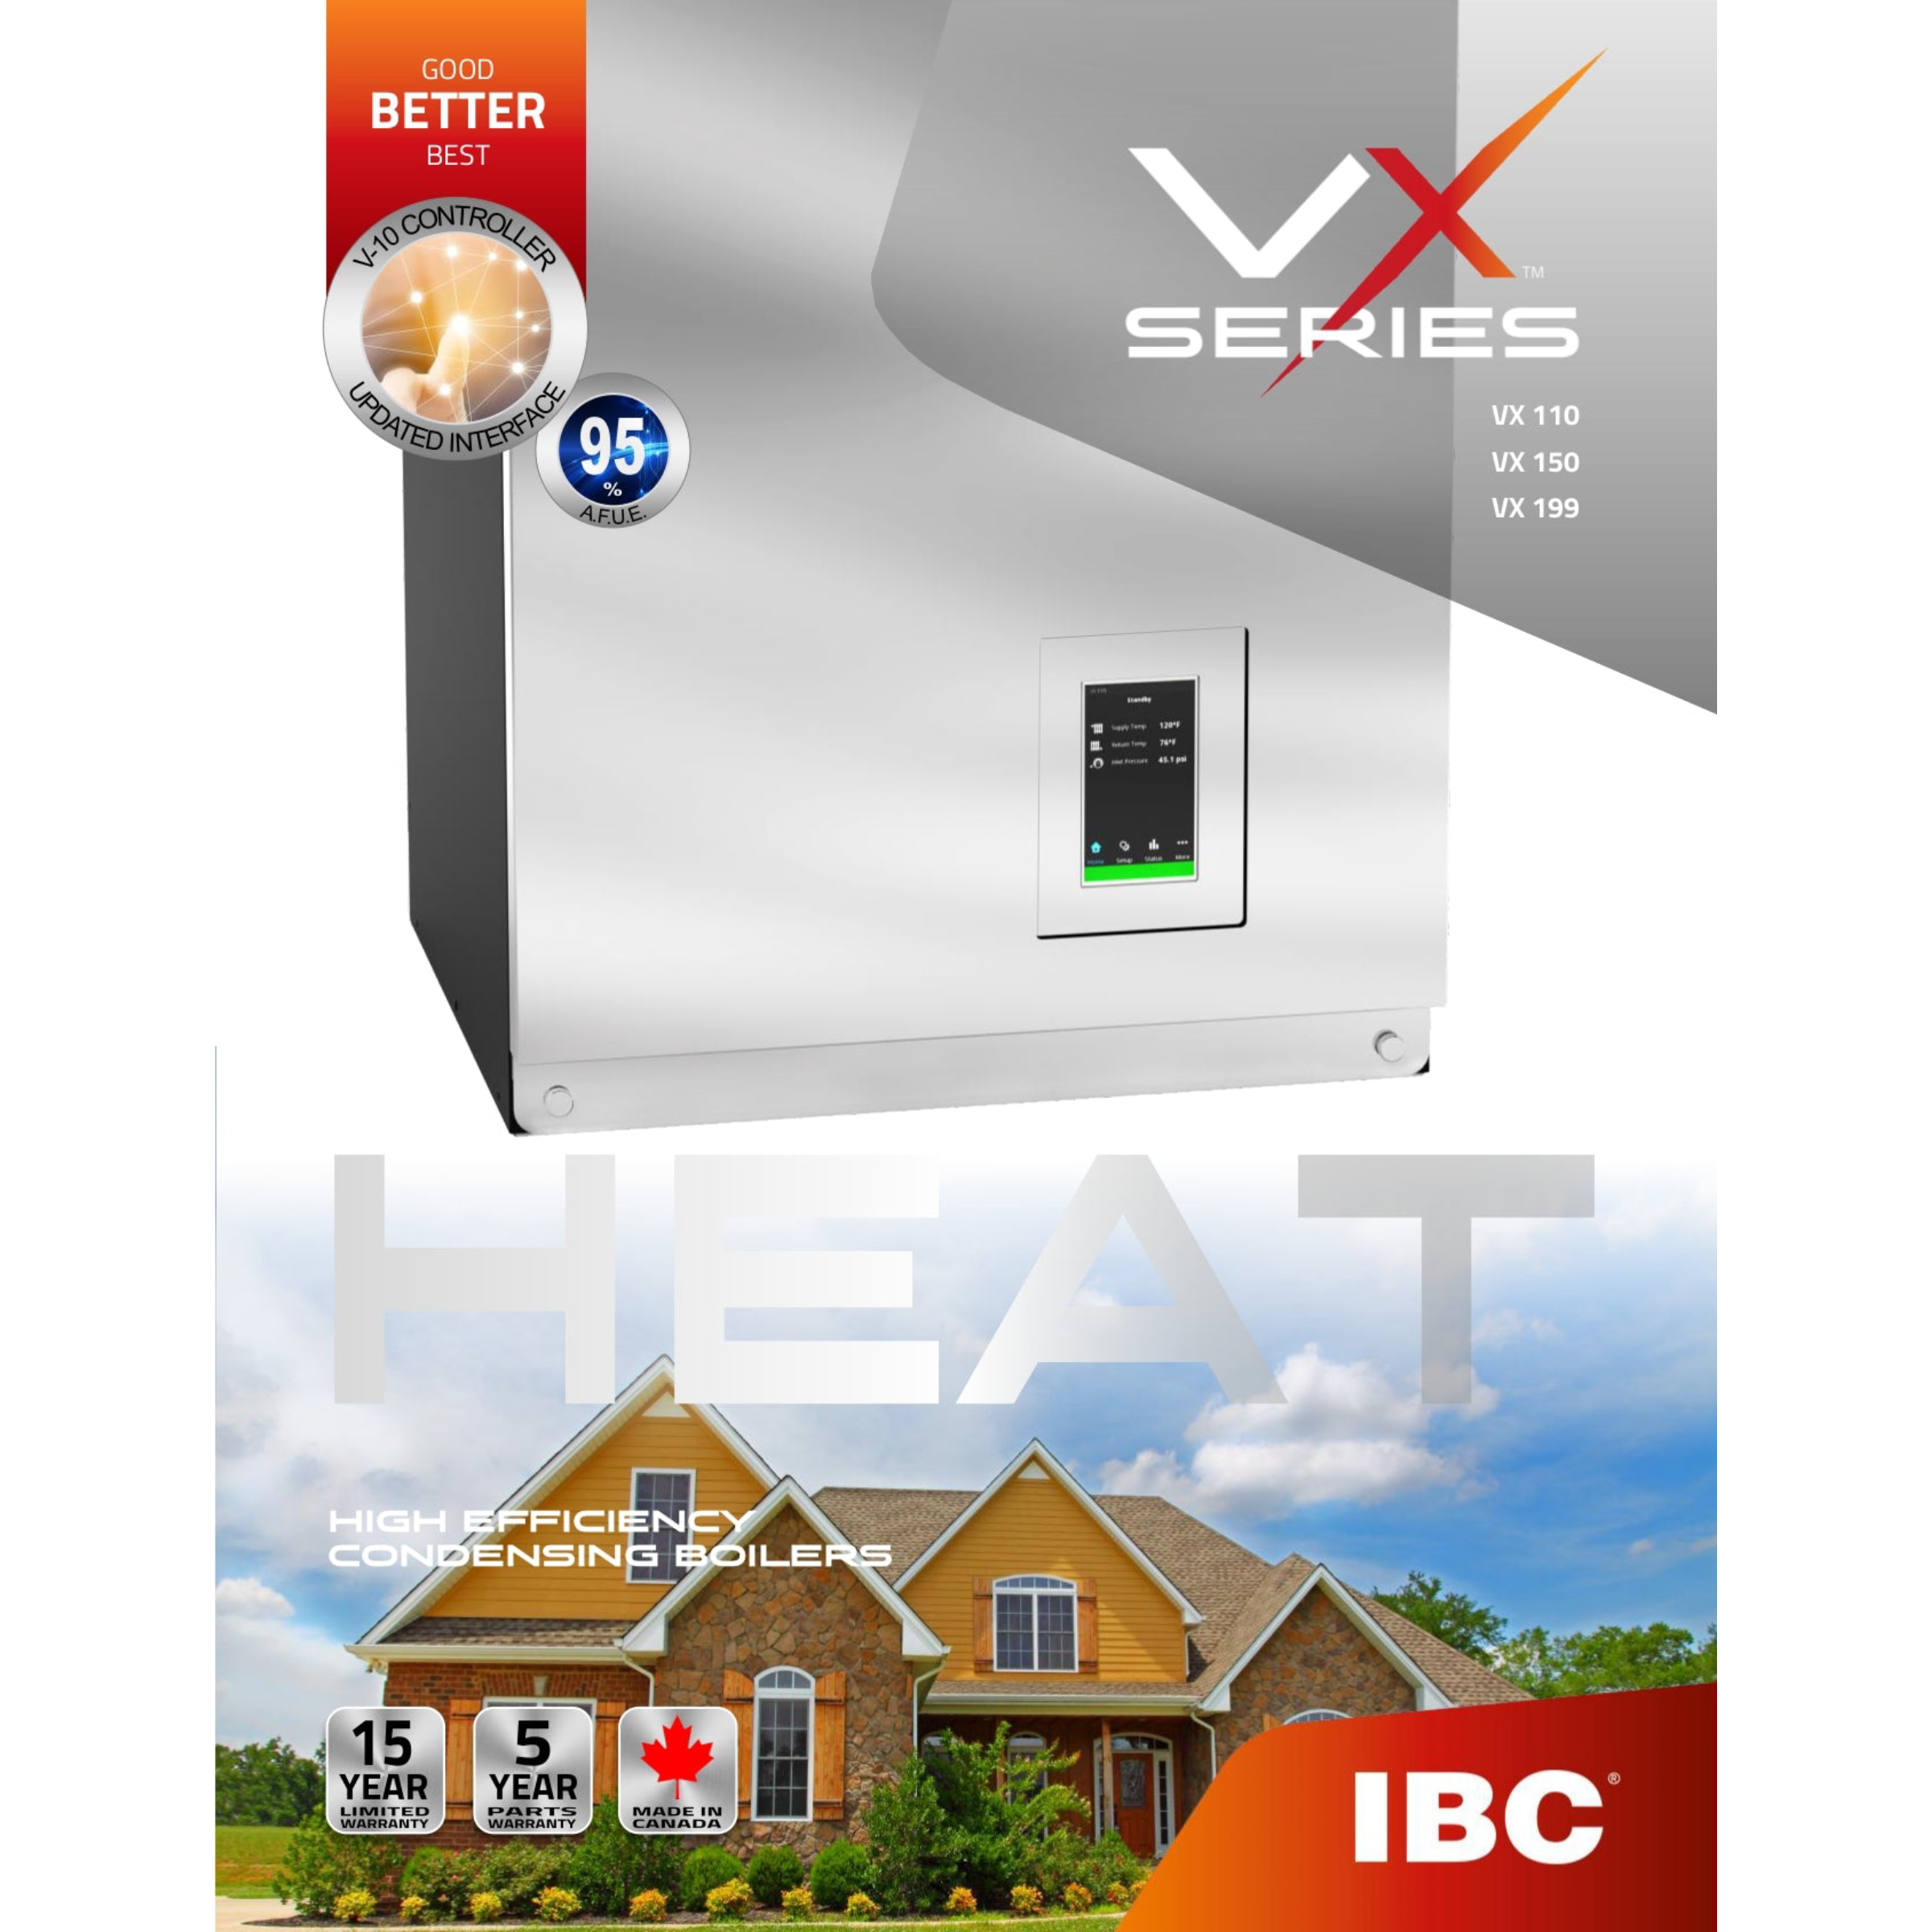 VX 150 IBC VX Series Residential High-Efficiency Modulating Condensing Boiler Natural Gas 23,000-150,000 BTU, 95% AFUE, Energy Star Qualified